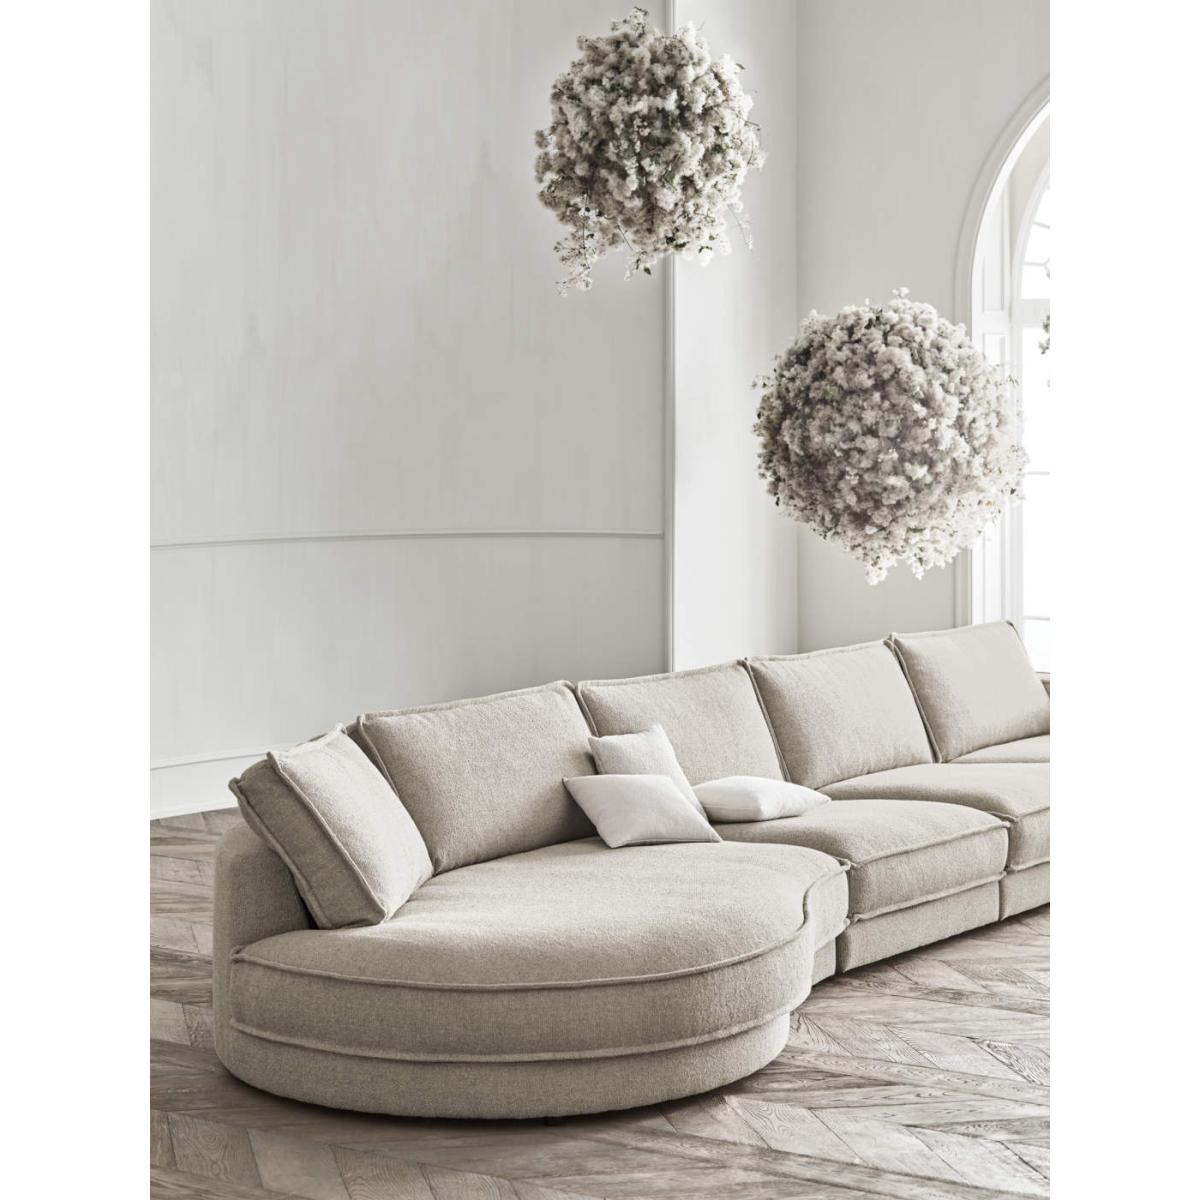 Bolia-Noora-3-units-sofa-with-rounded-open-end-3-elemes-kanape-kerekitett-nyitott-veggel-